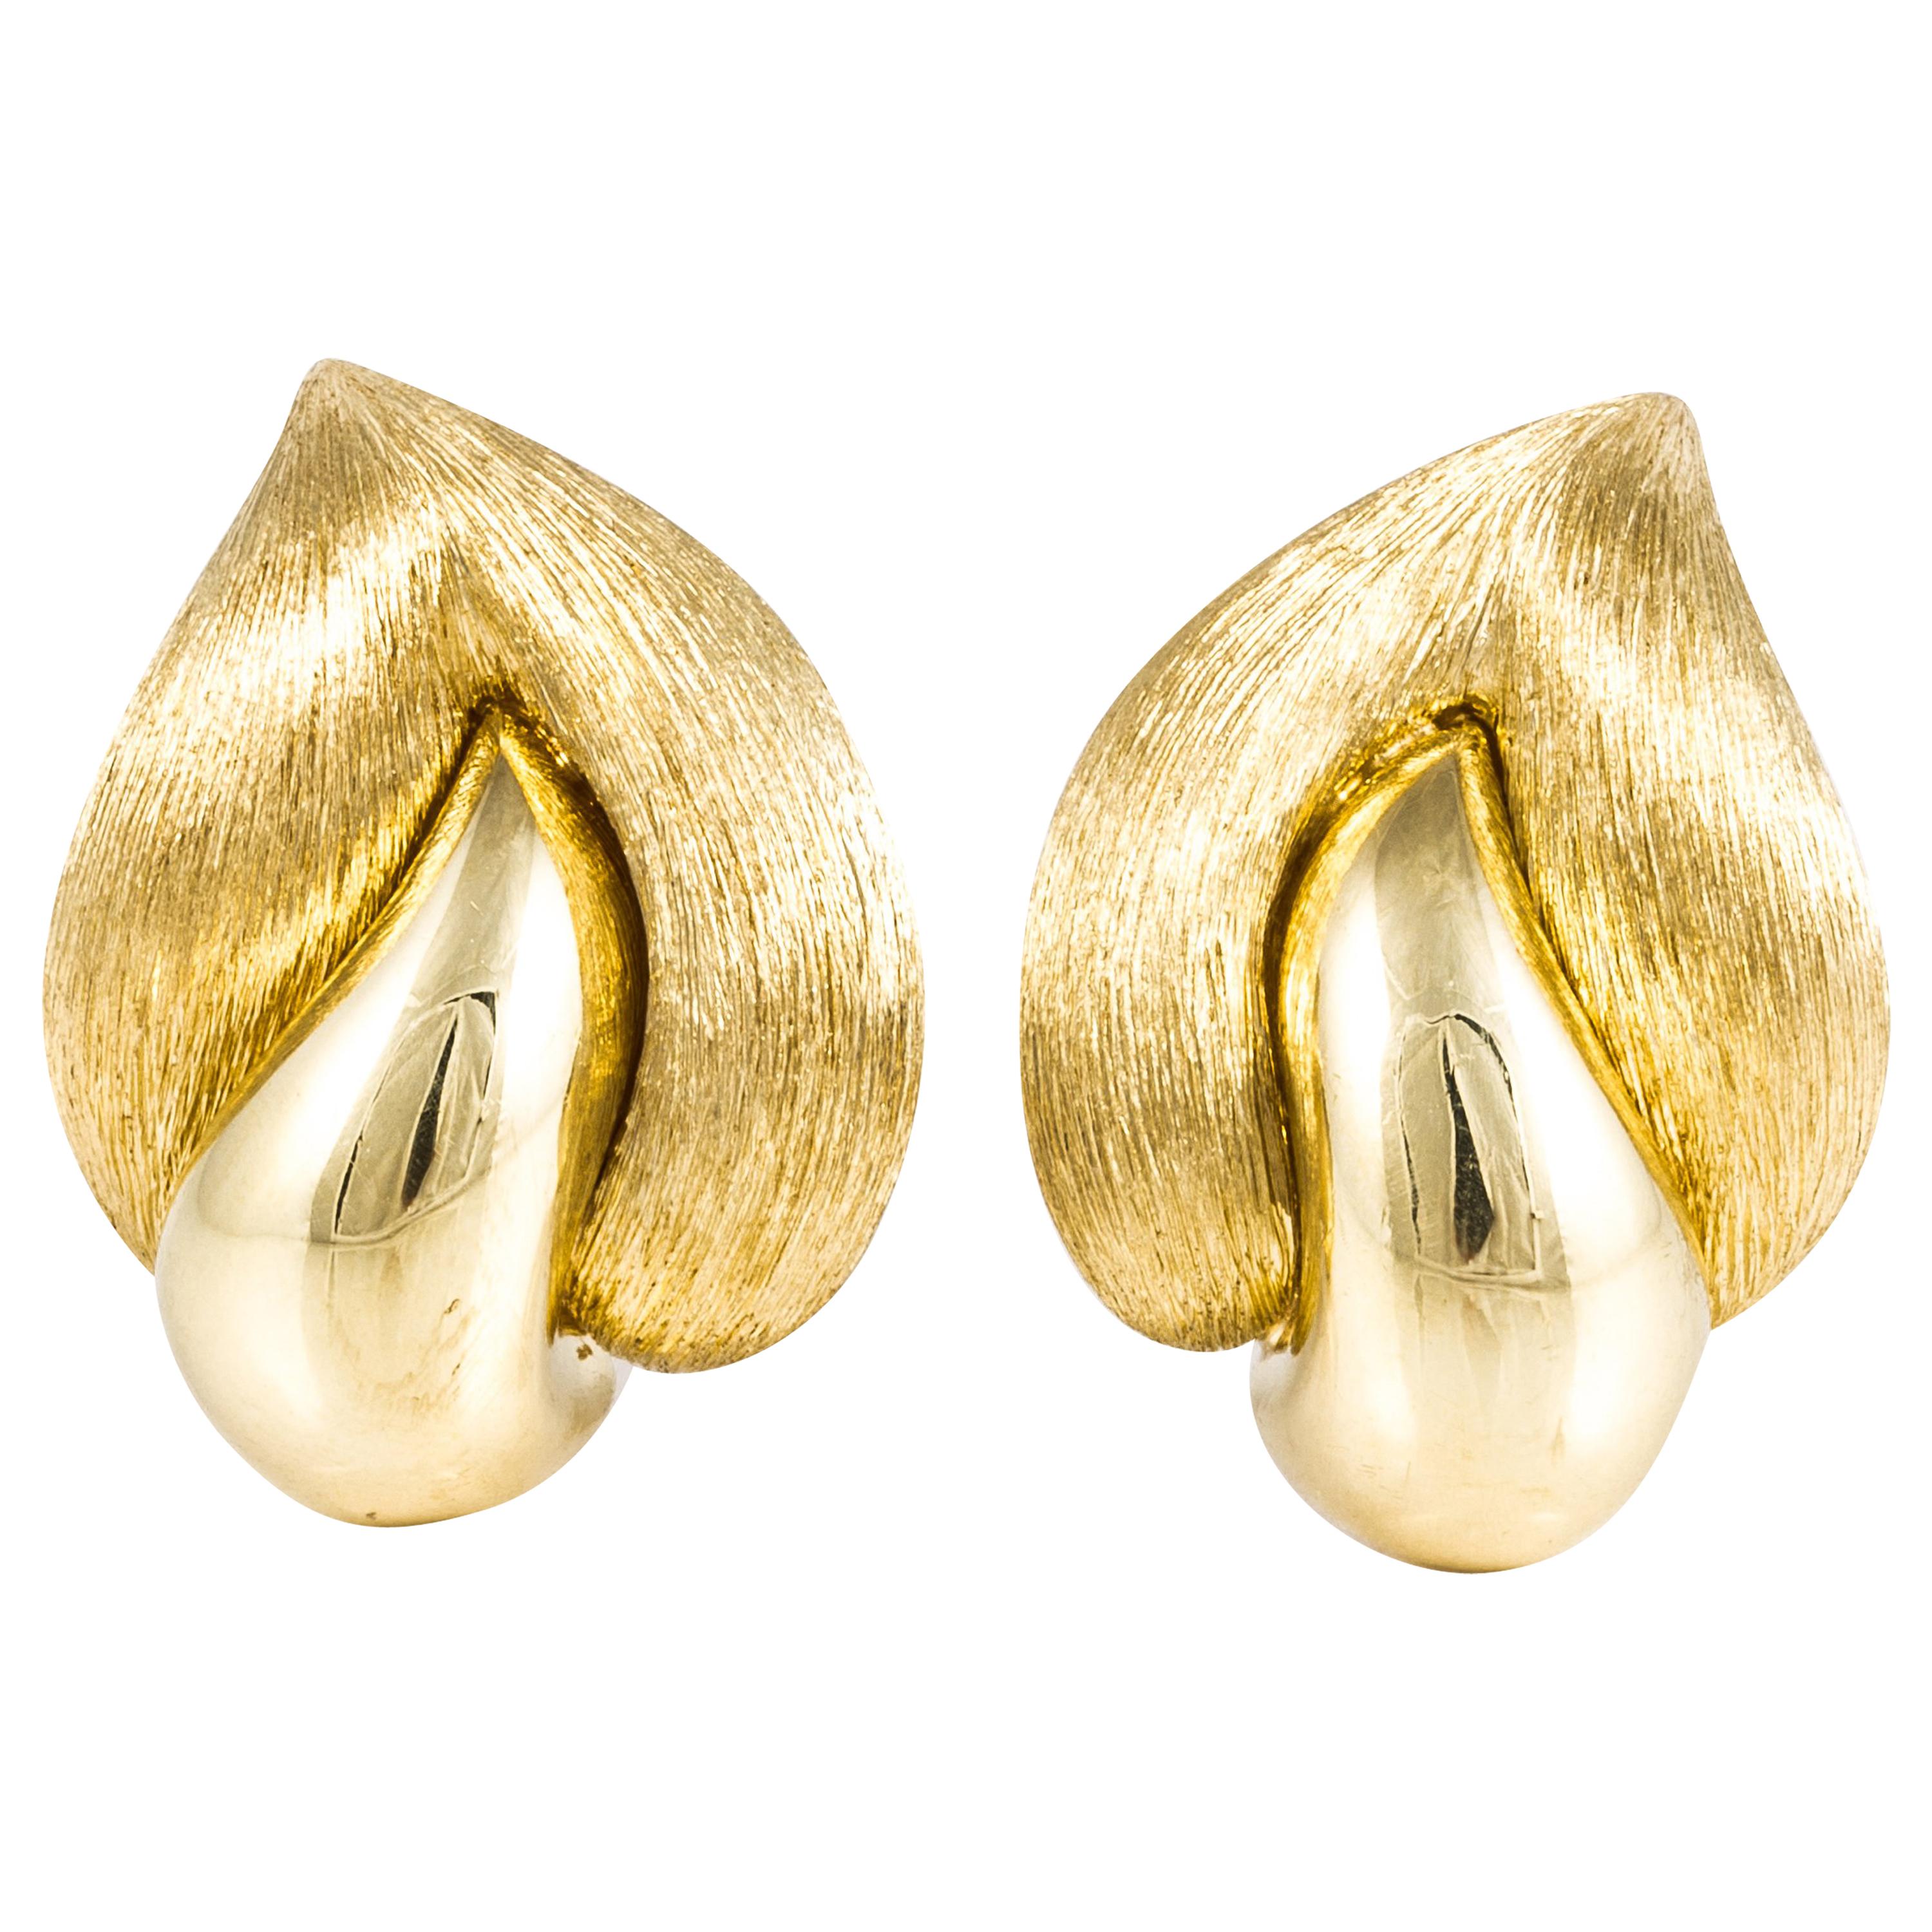 Henry Dunay Sabi Earrings in 18K Gold For Sale